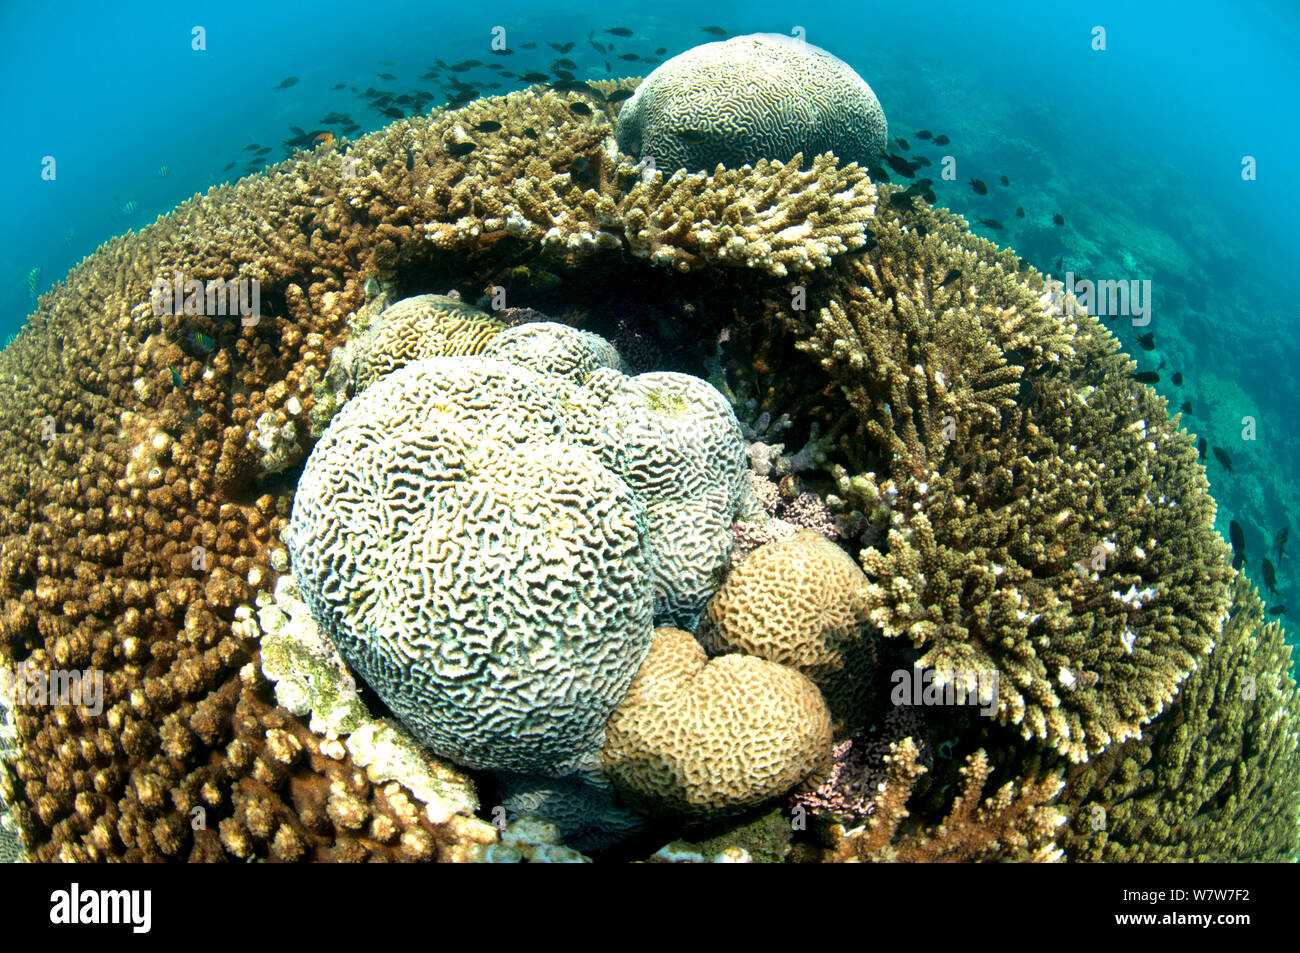 Corals (Acropora) with brain corals (Faviidae) protruding. Karan Island, Saudi Arabia sector of the Arabian gulf. Stock Photo